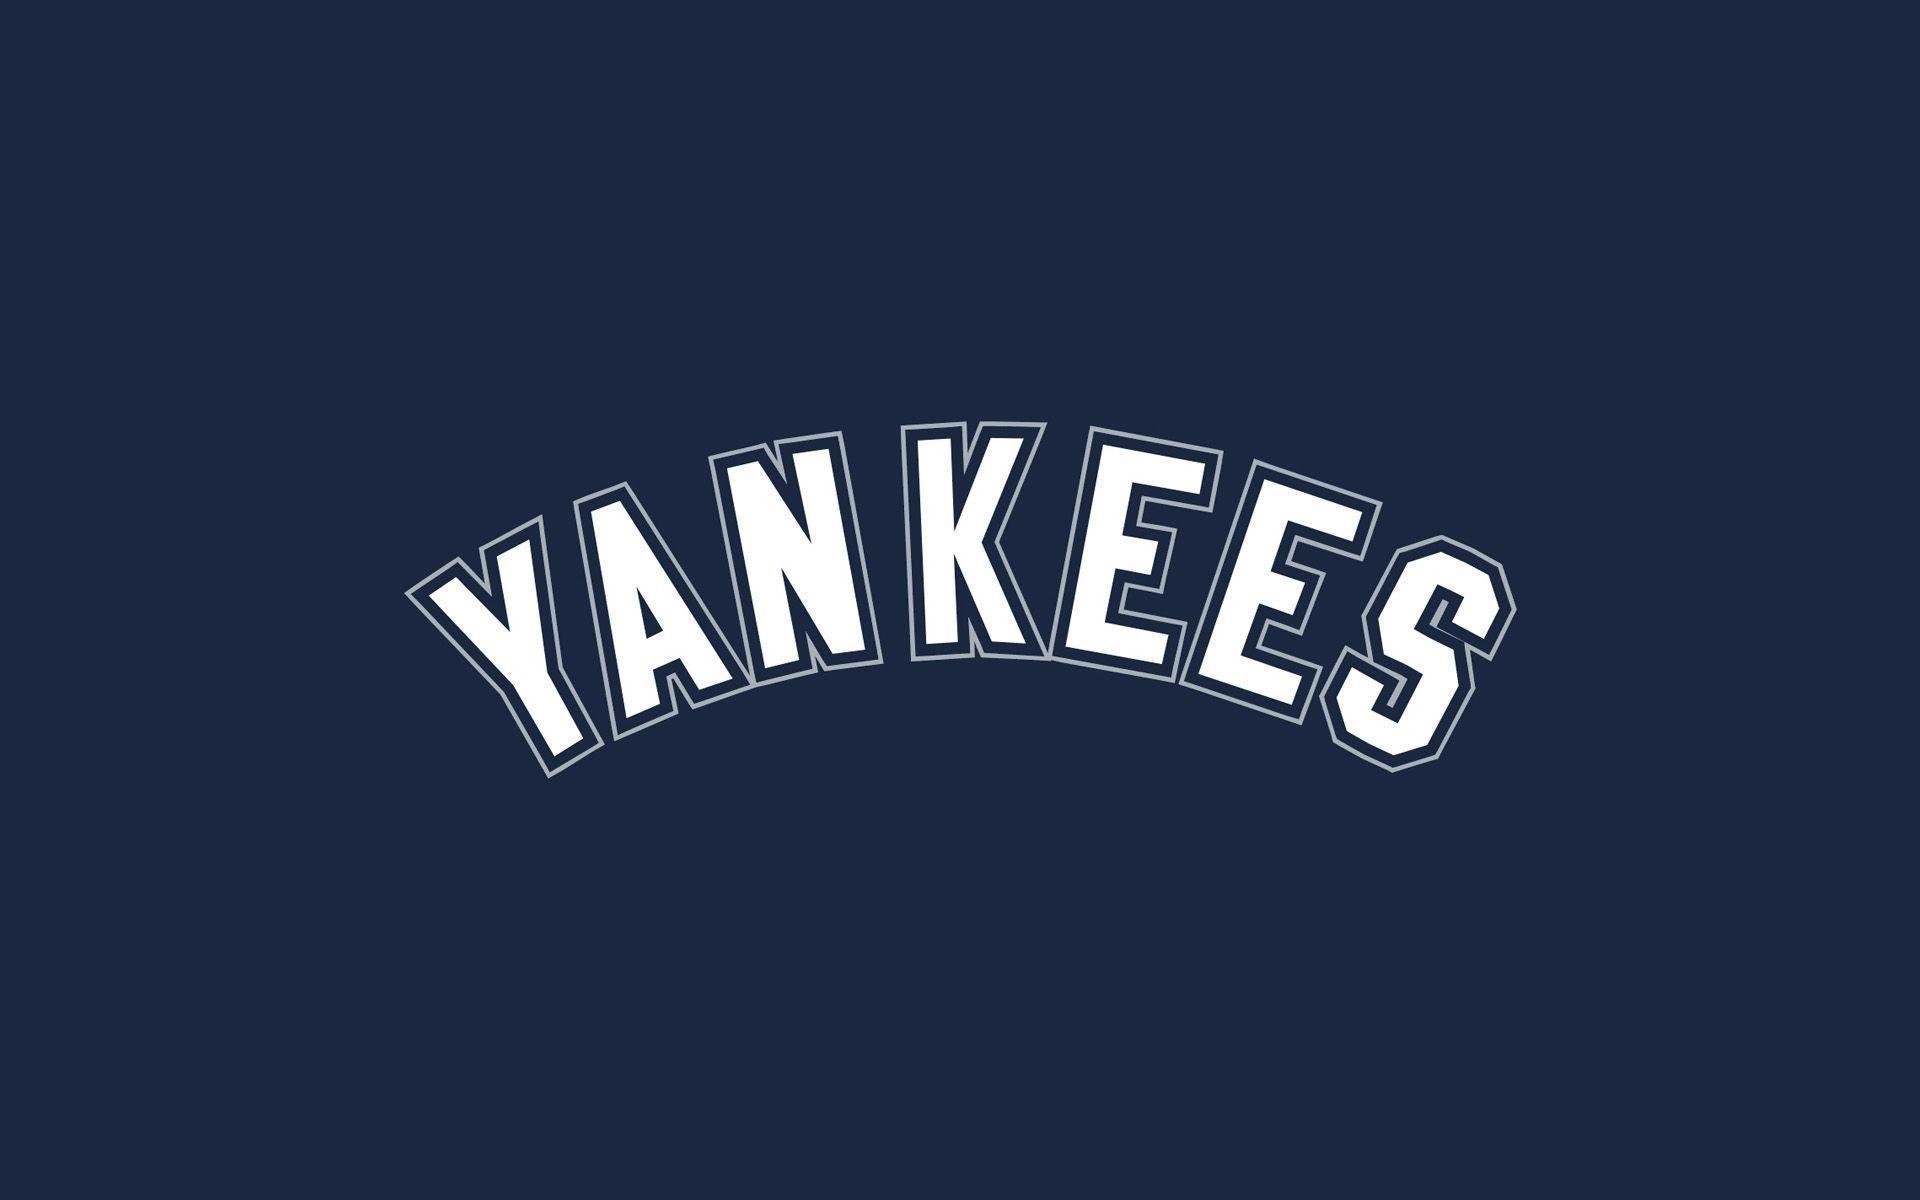 New York Yankees wallpaper. New York Yankees background